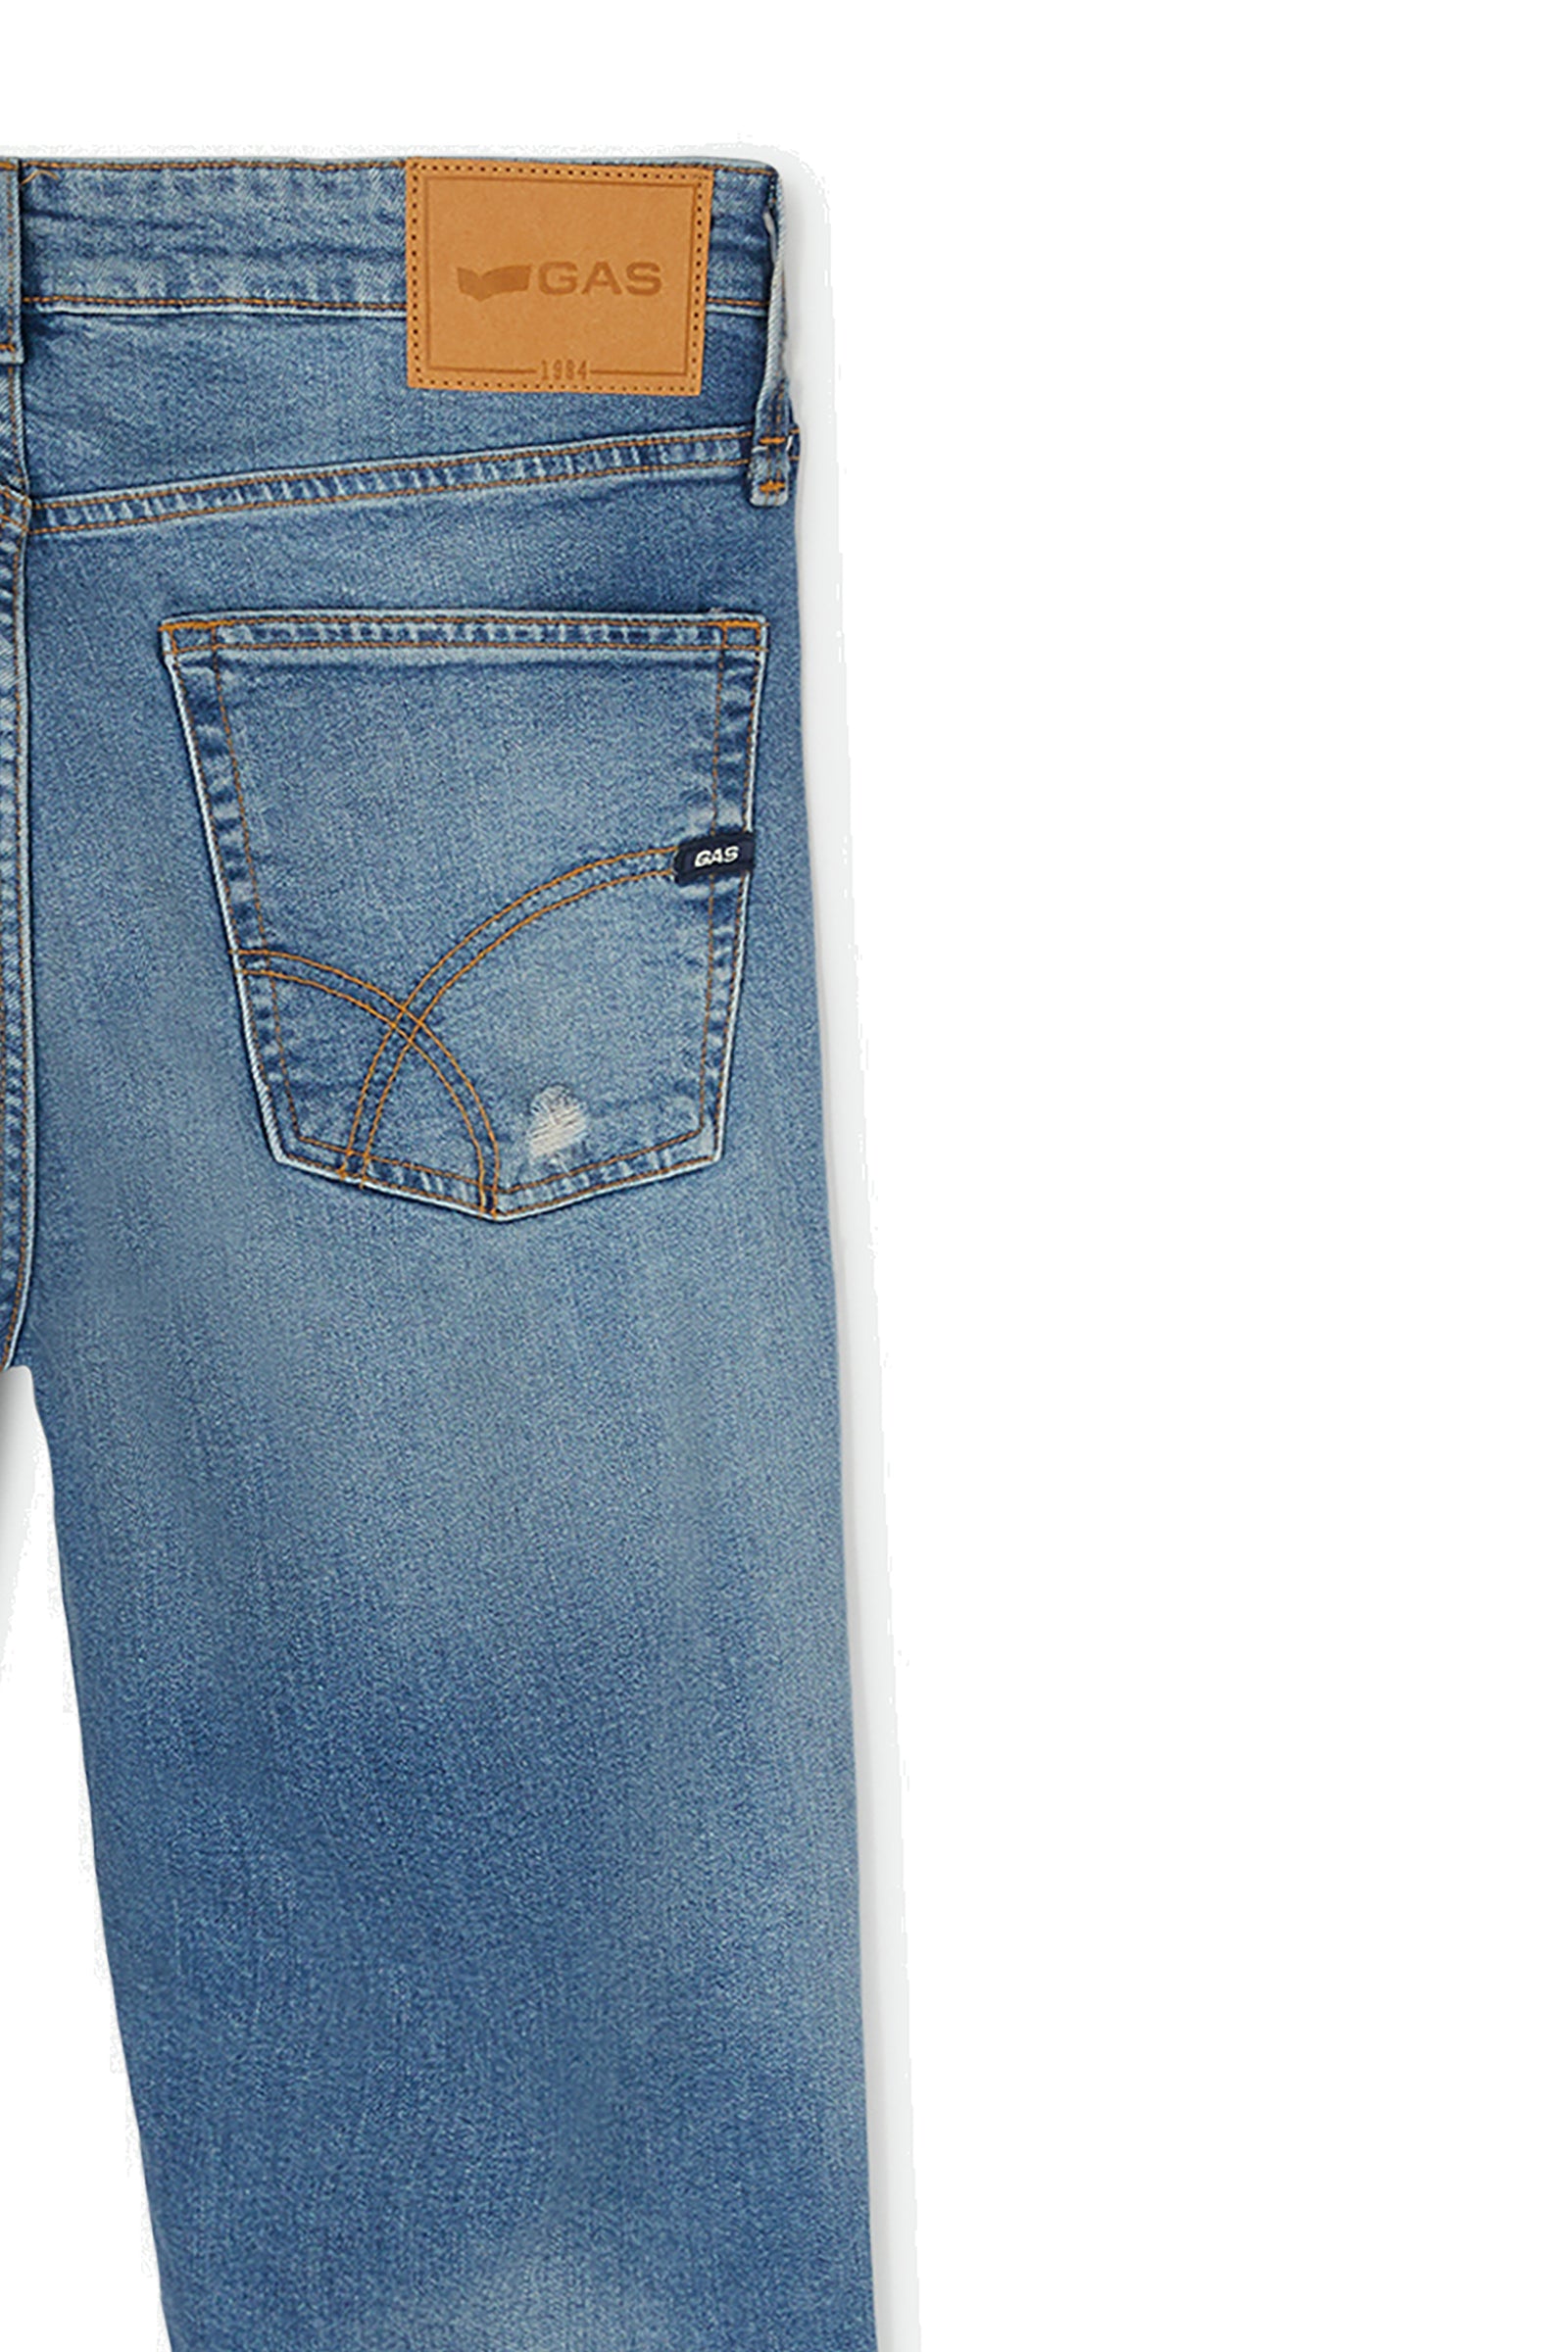 Albert Simple Rev 5 Pocket in Dirty Light Use Jeans GAS   